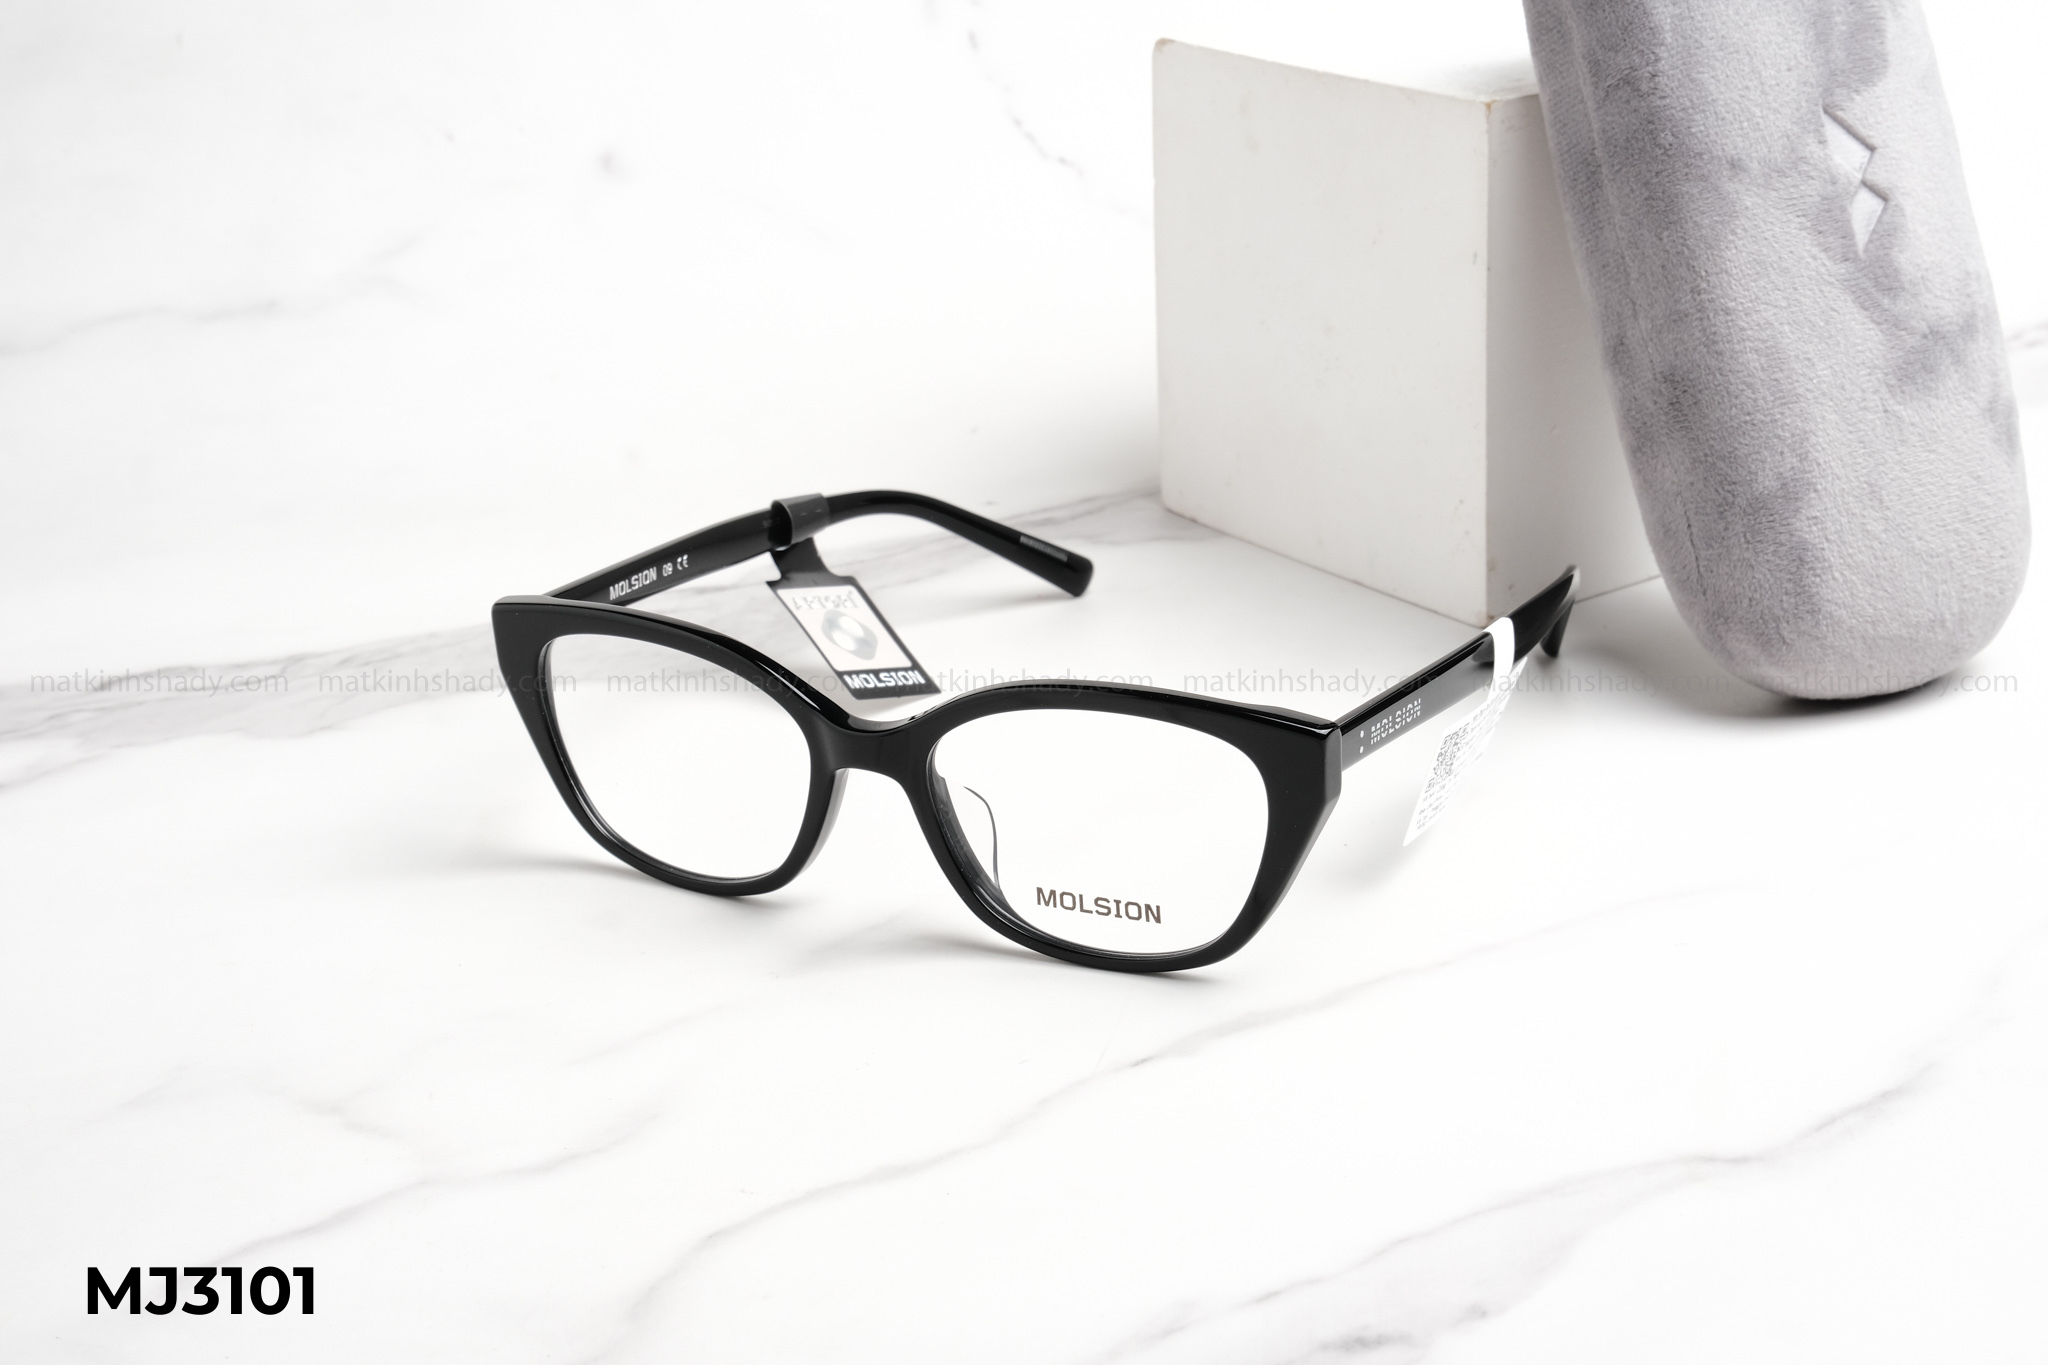  Molsion Eyewear - Glasses - MJ3101 